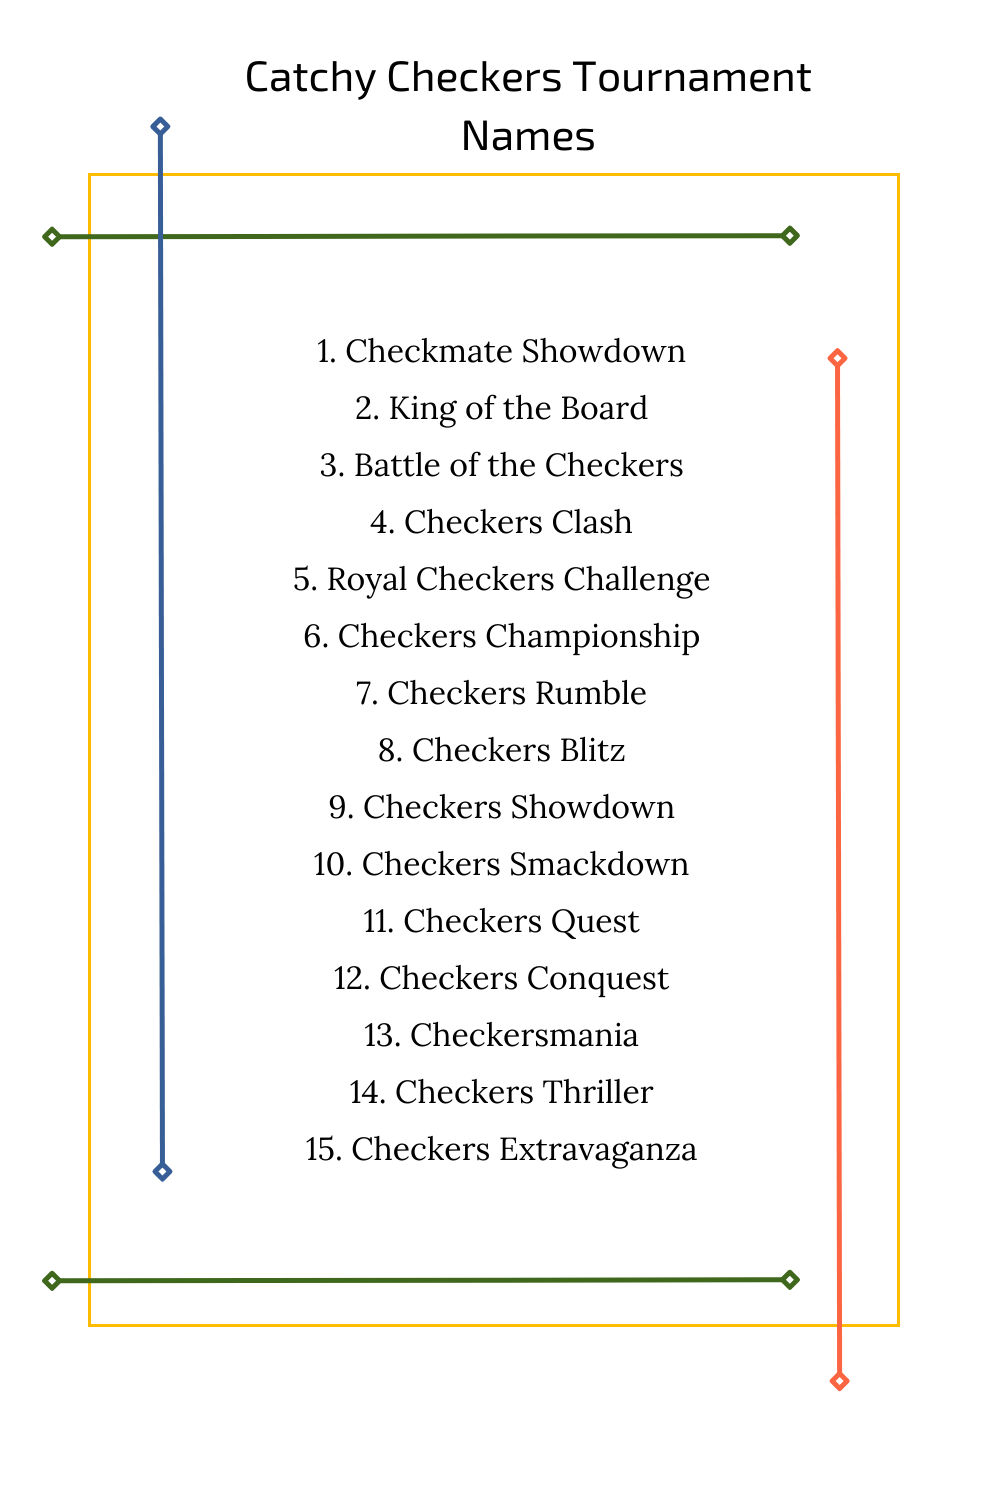 Catchy Checkers Tournament Names